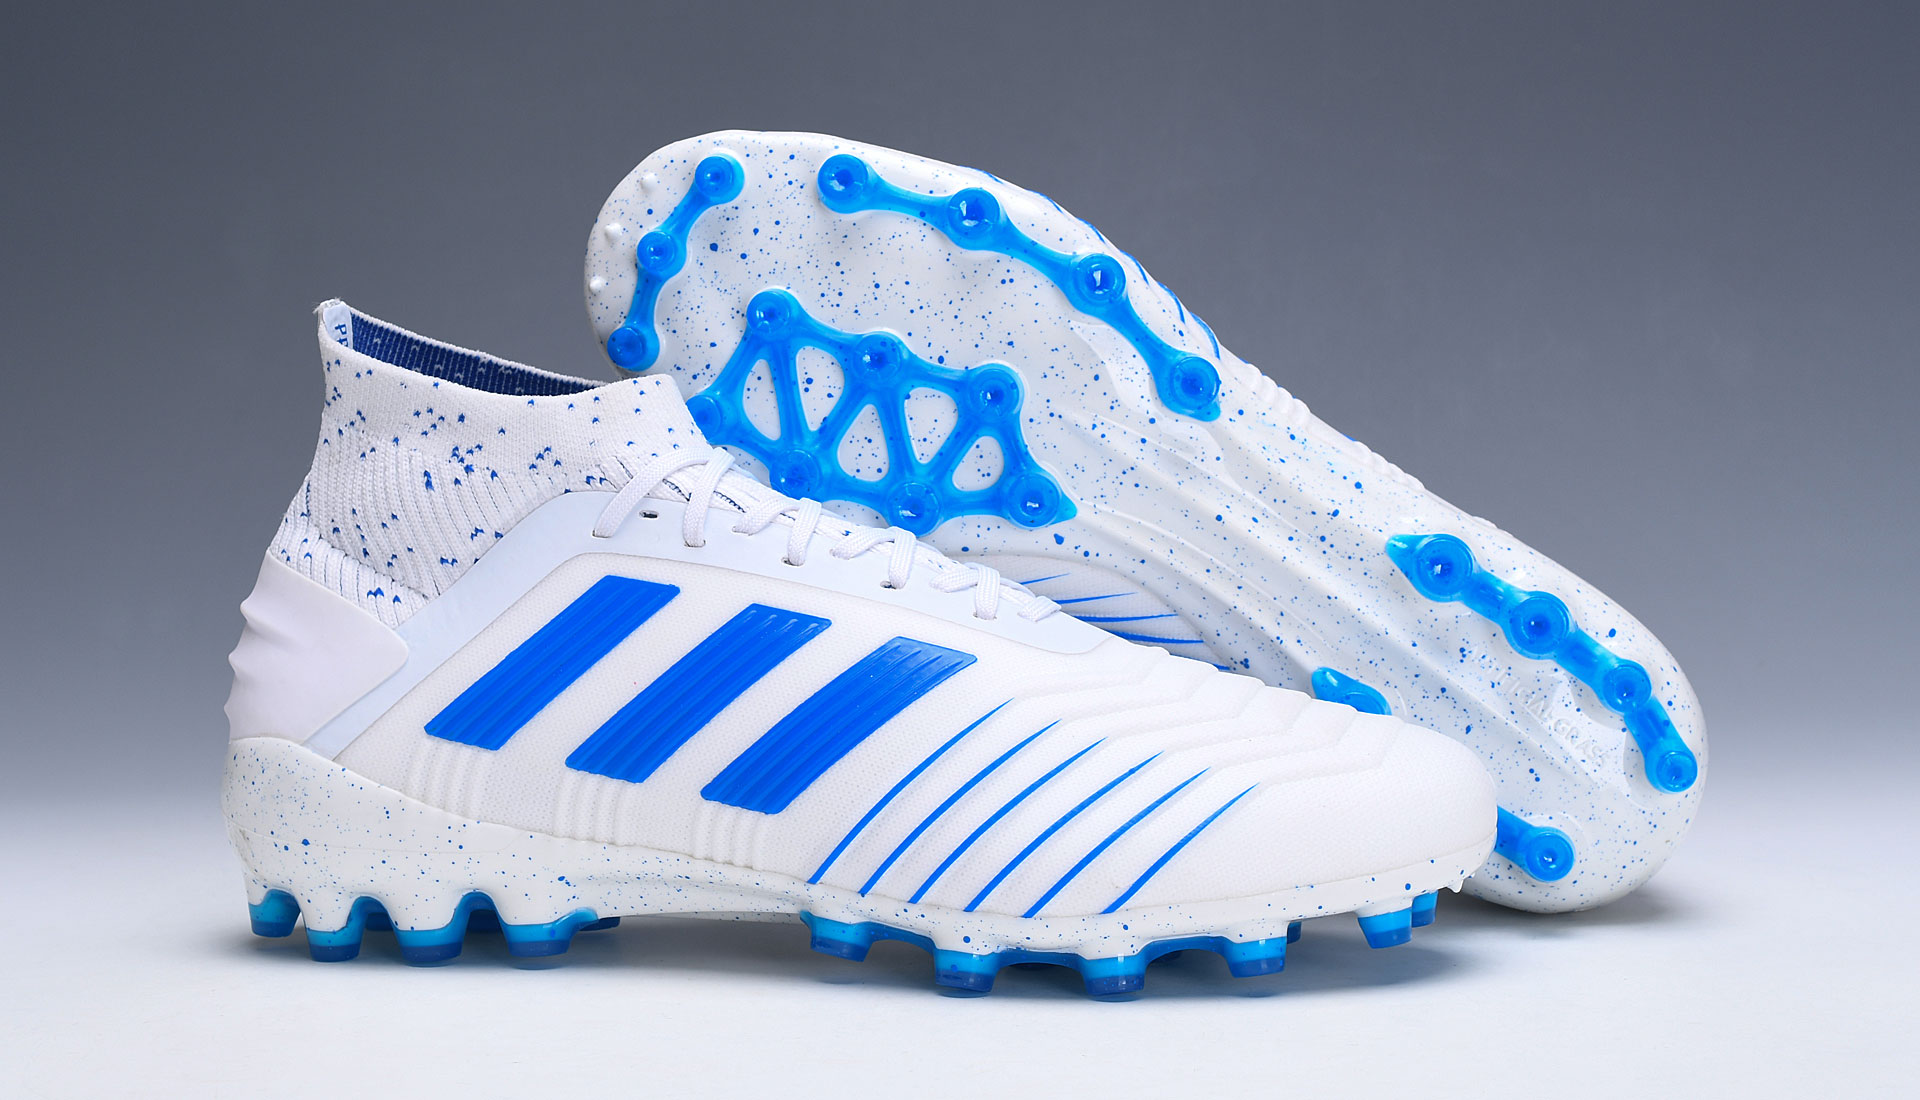 Adidas PREDATOR 19.1 AG White G28981 - The Ultimate Football Boot